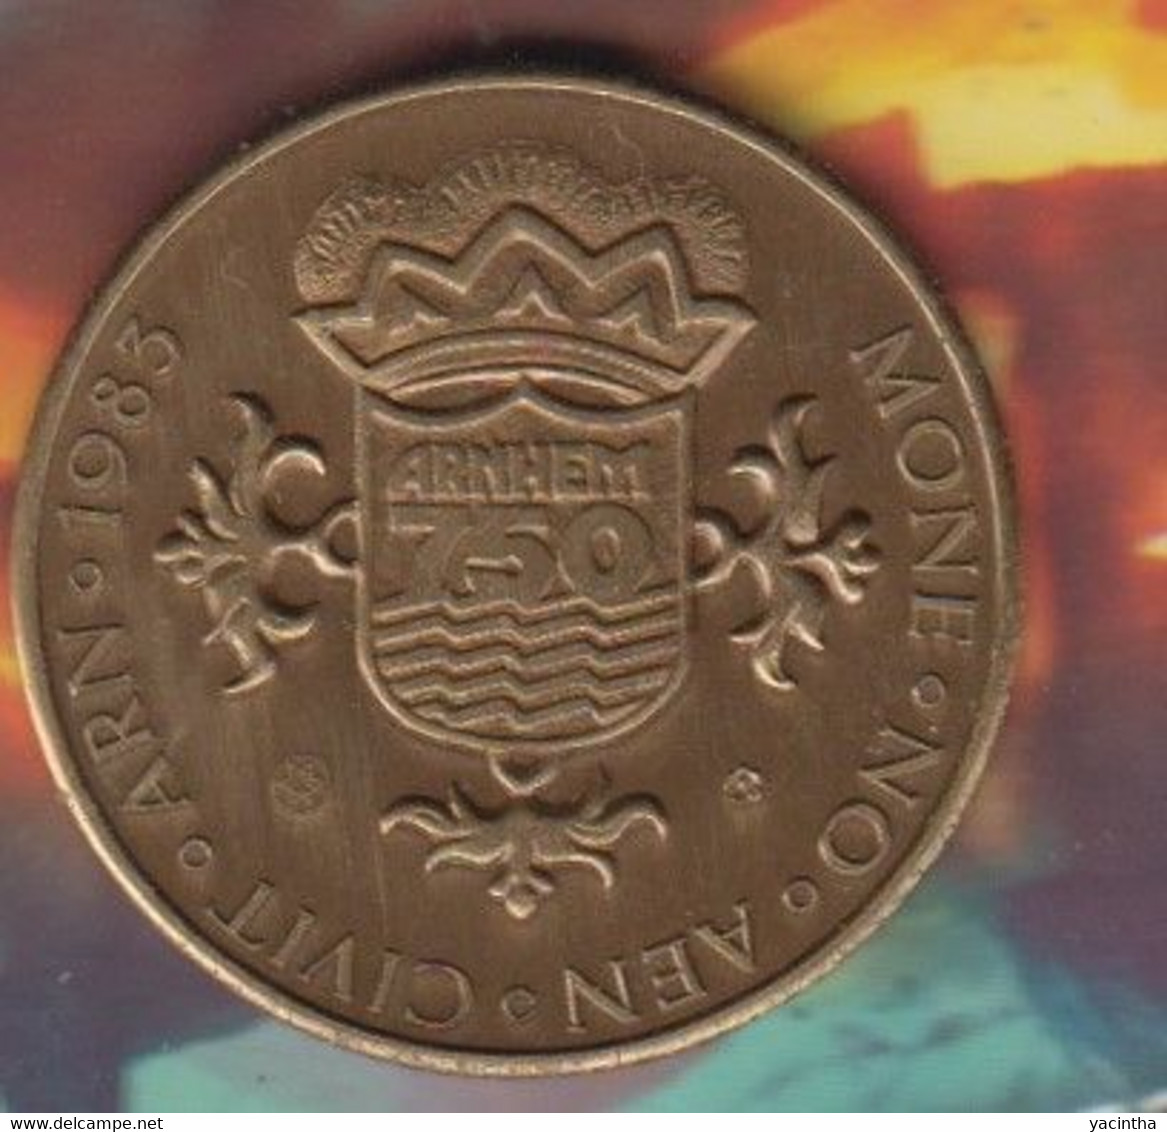 Arnhem  750 Jaar   1233 - 1983  Gele Rijders    (1010) - Souvenirmunten (elongated Coins)